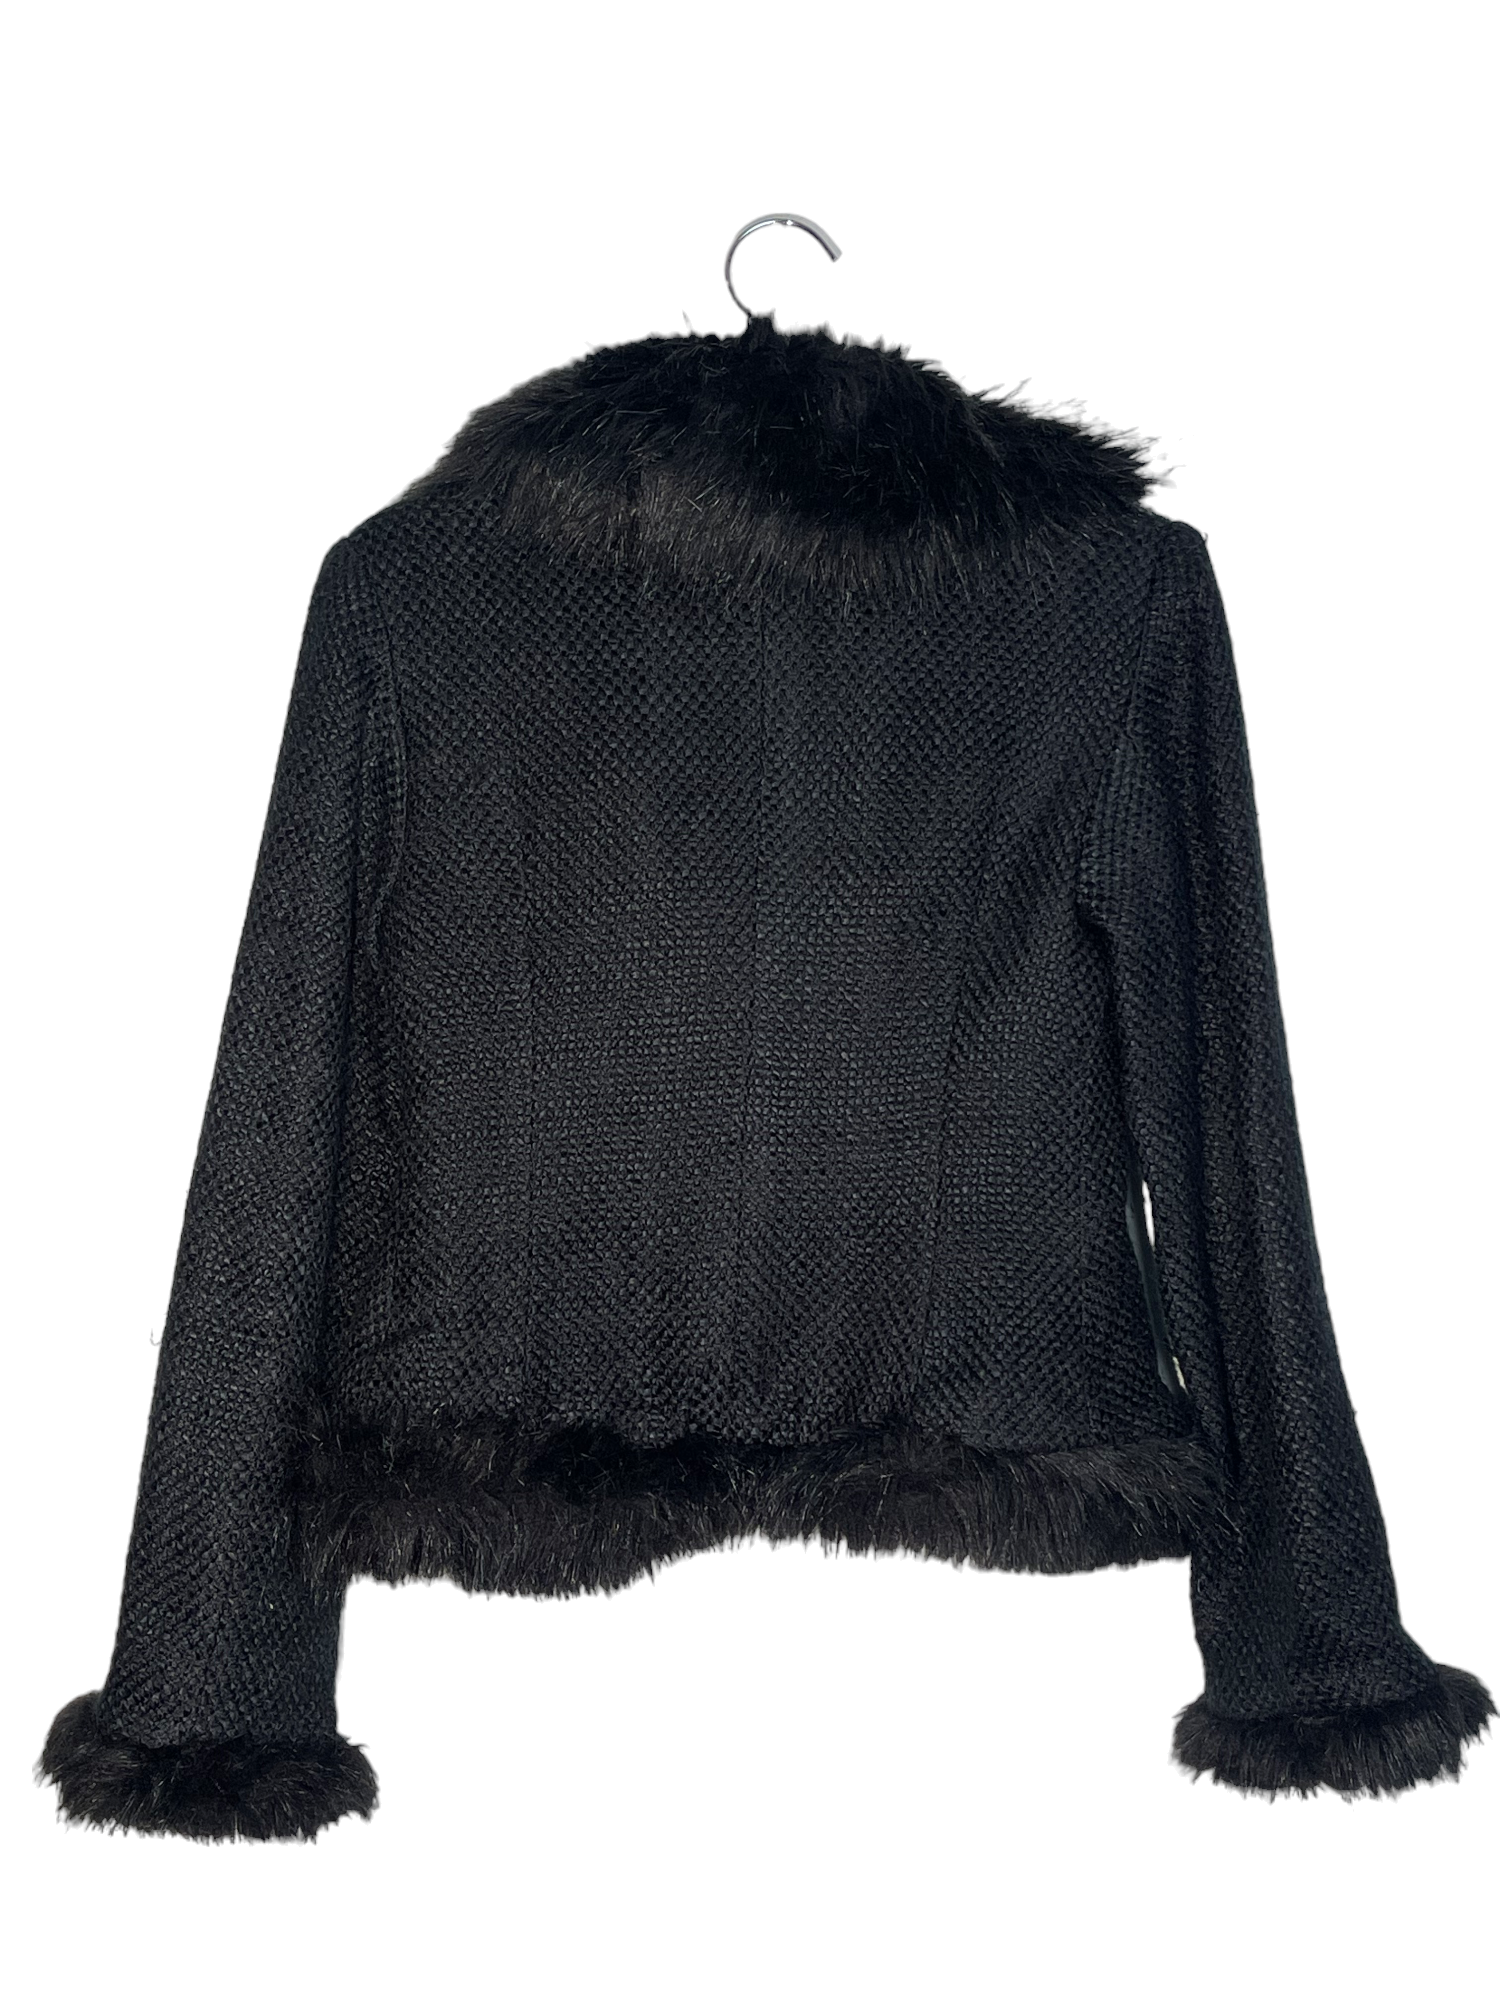 Black Faux Fur Knit Jacket